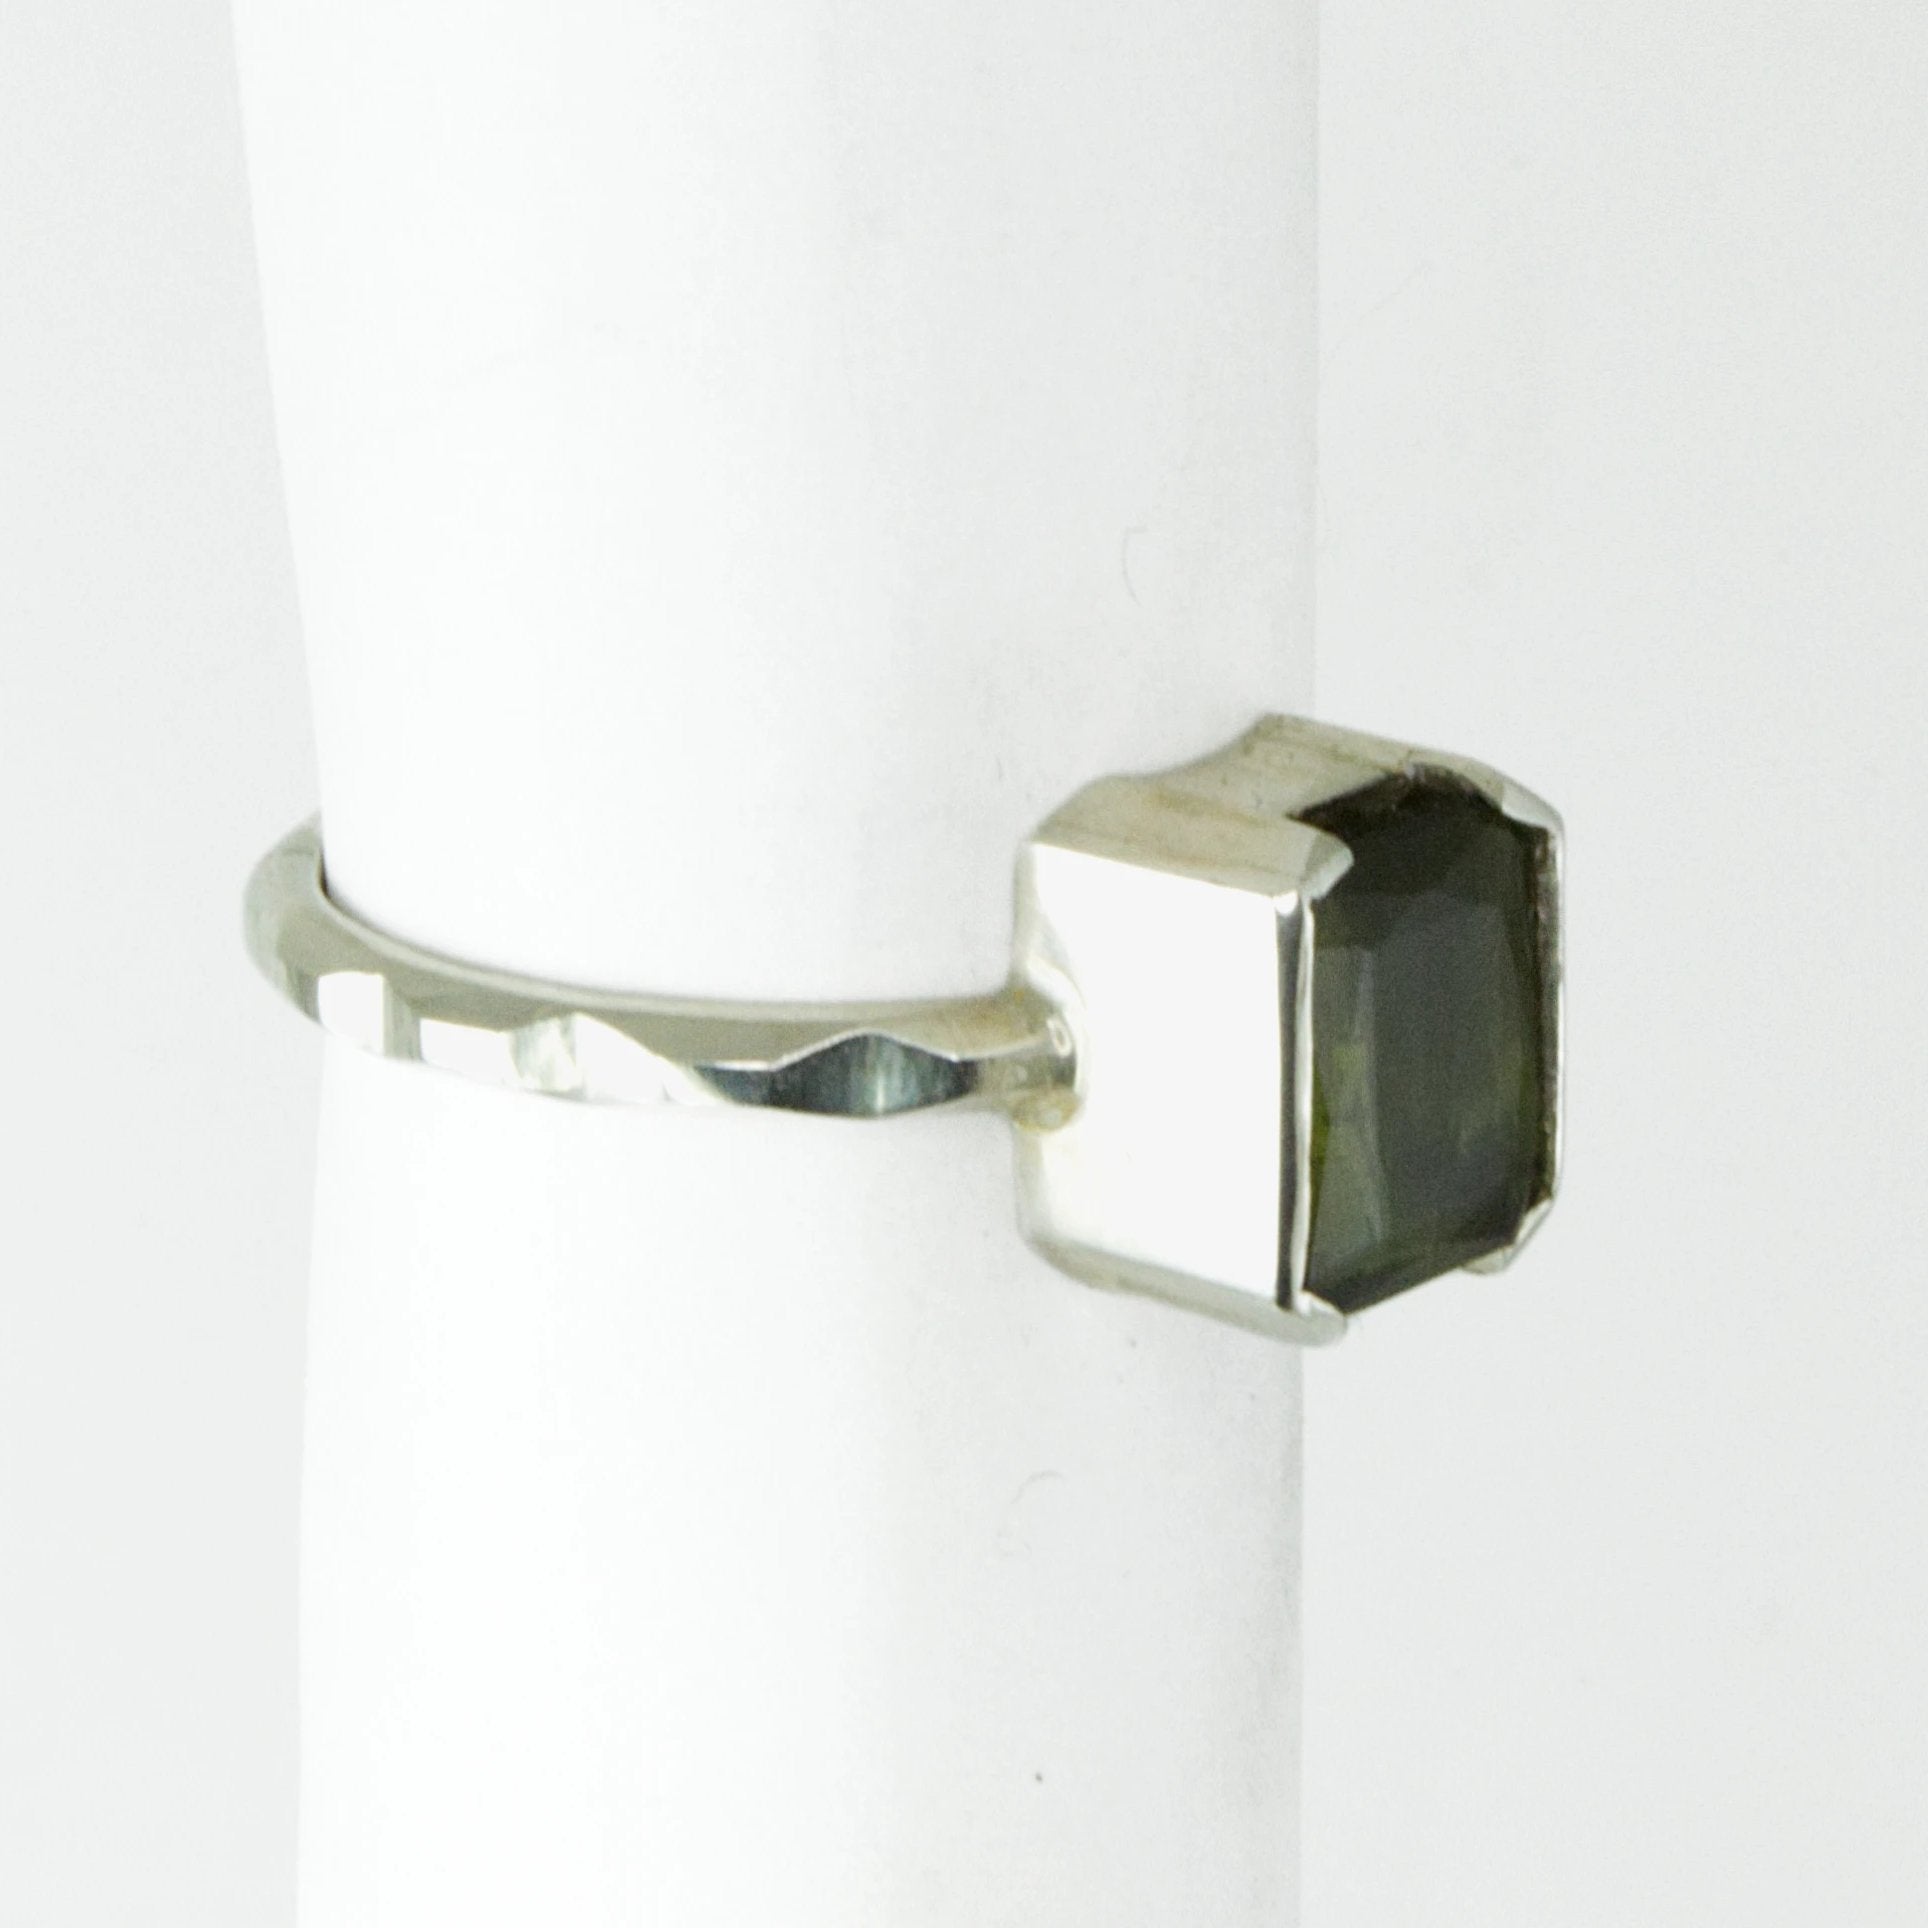 Green Tourmaline Skinny Frusta Ring - Bracket Set - Size 6.5